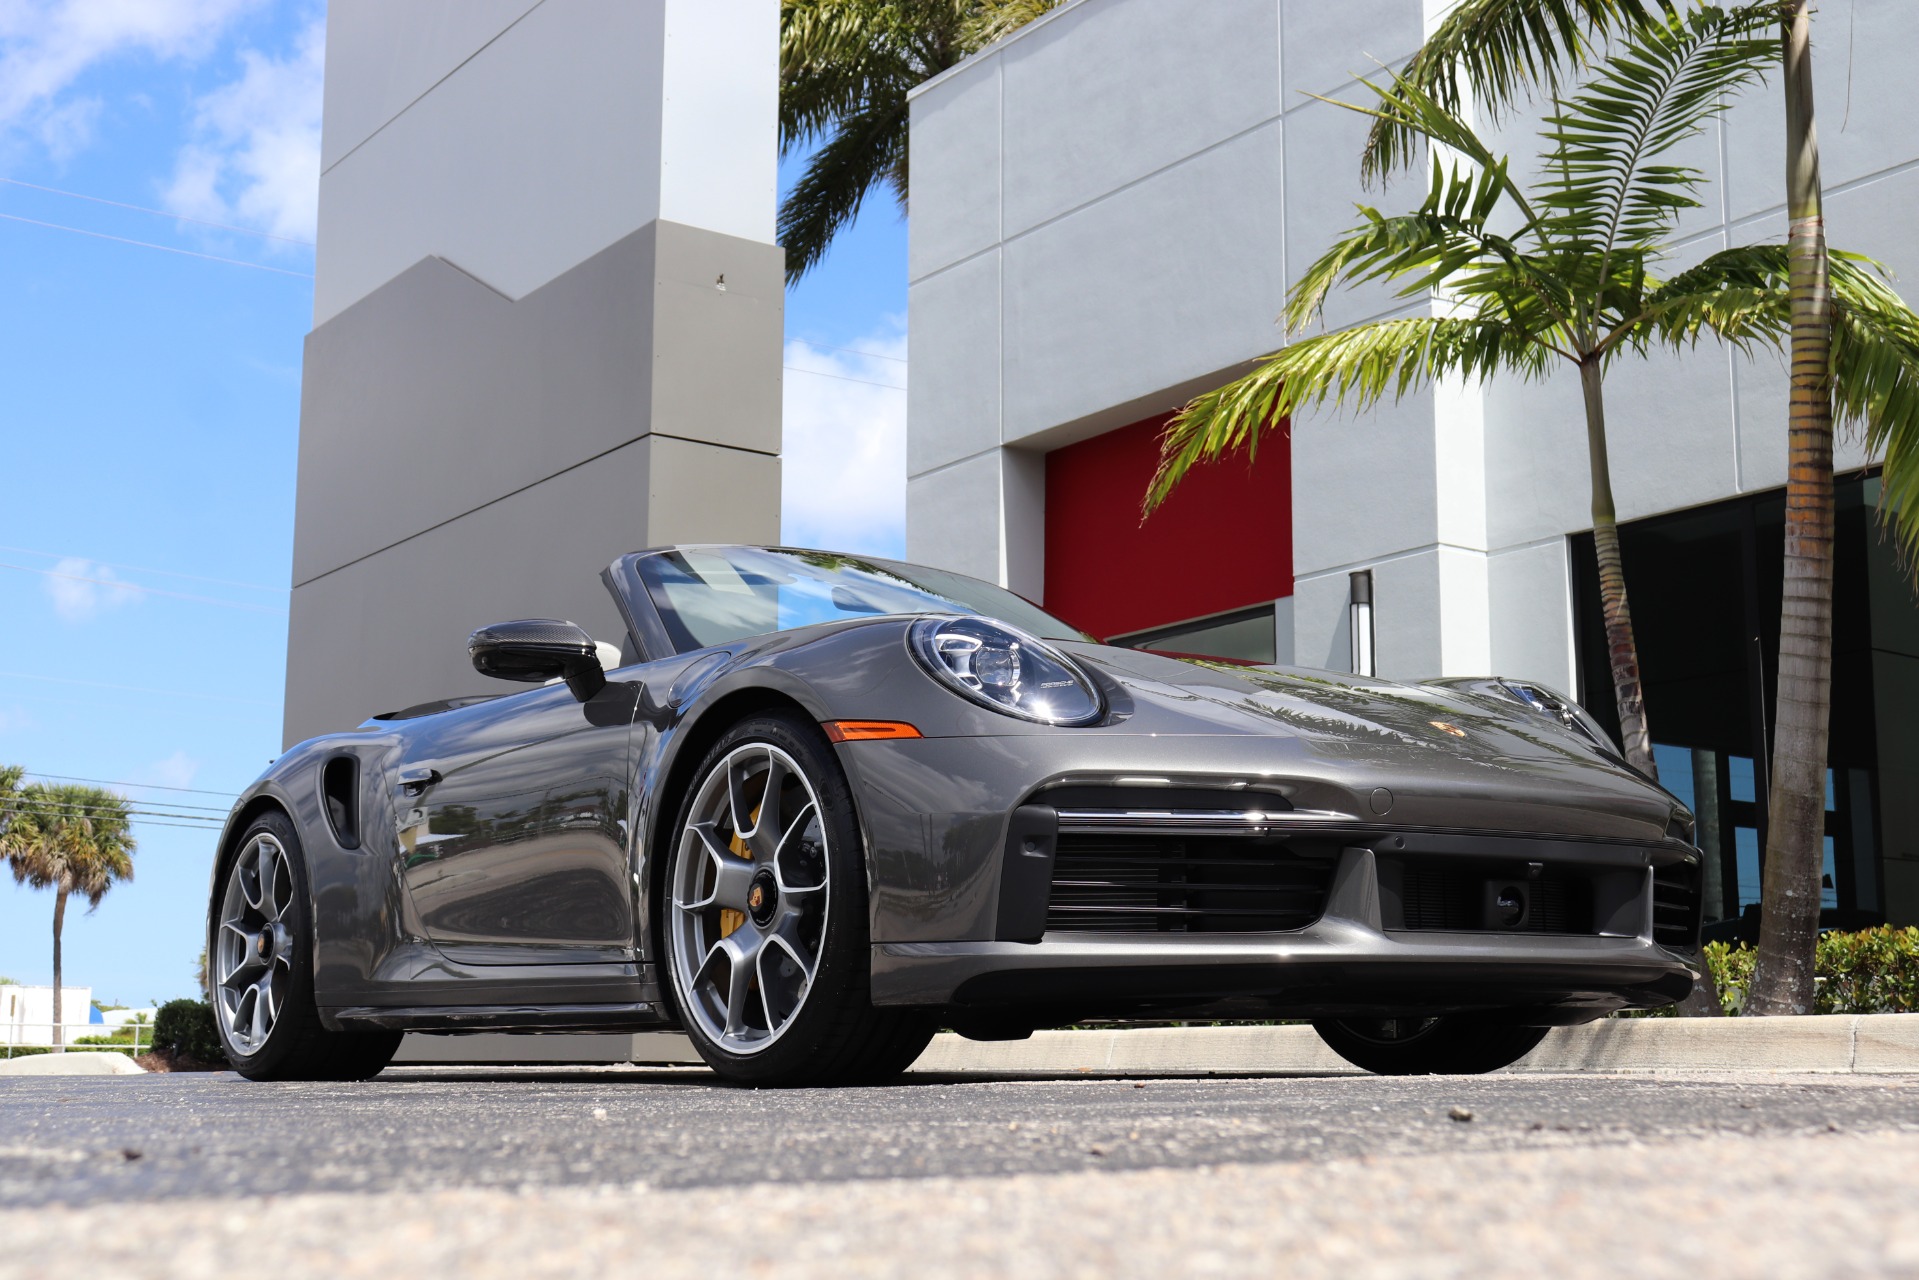 Used 2021 Porsche 911 Turbo S For Sale ($269,900) | Marino Performance